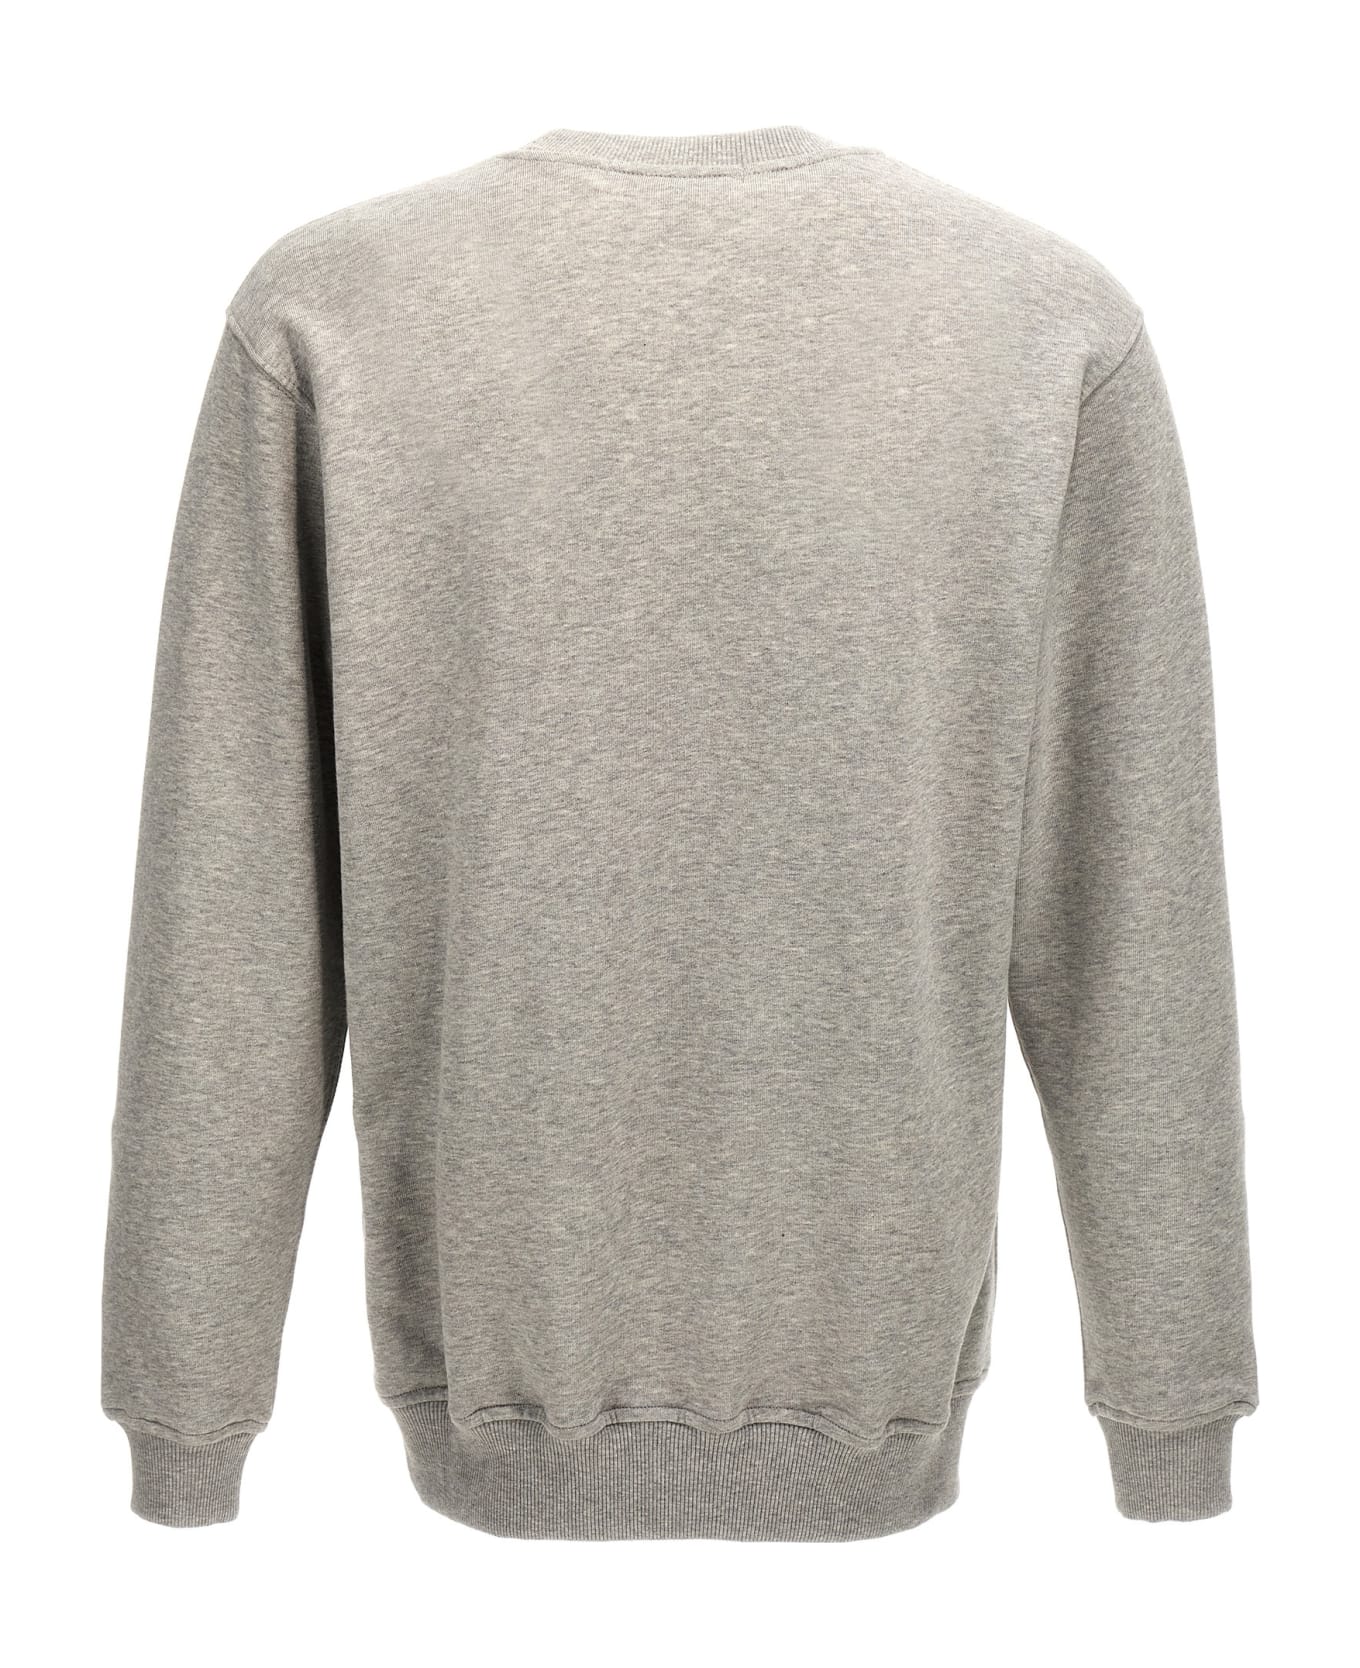 Comme des Garçons Shirt 'andy Warhol' Sweatshirt - Top Grey